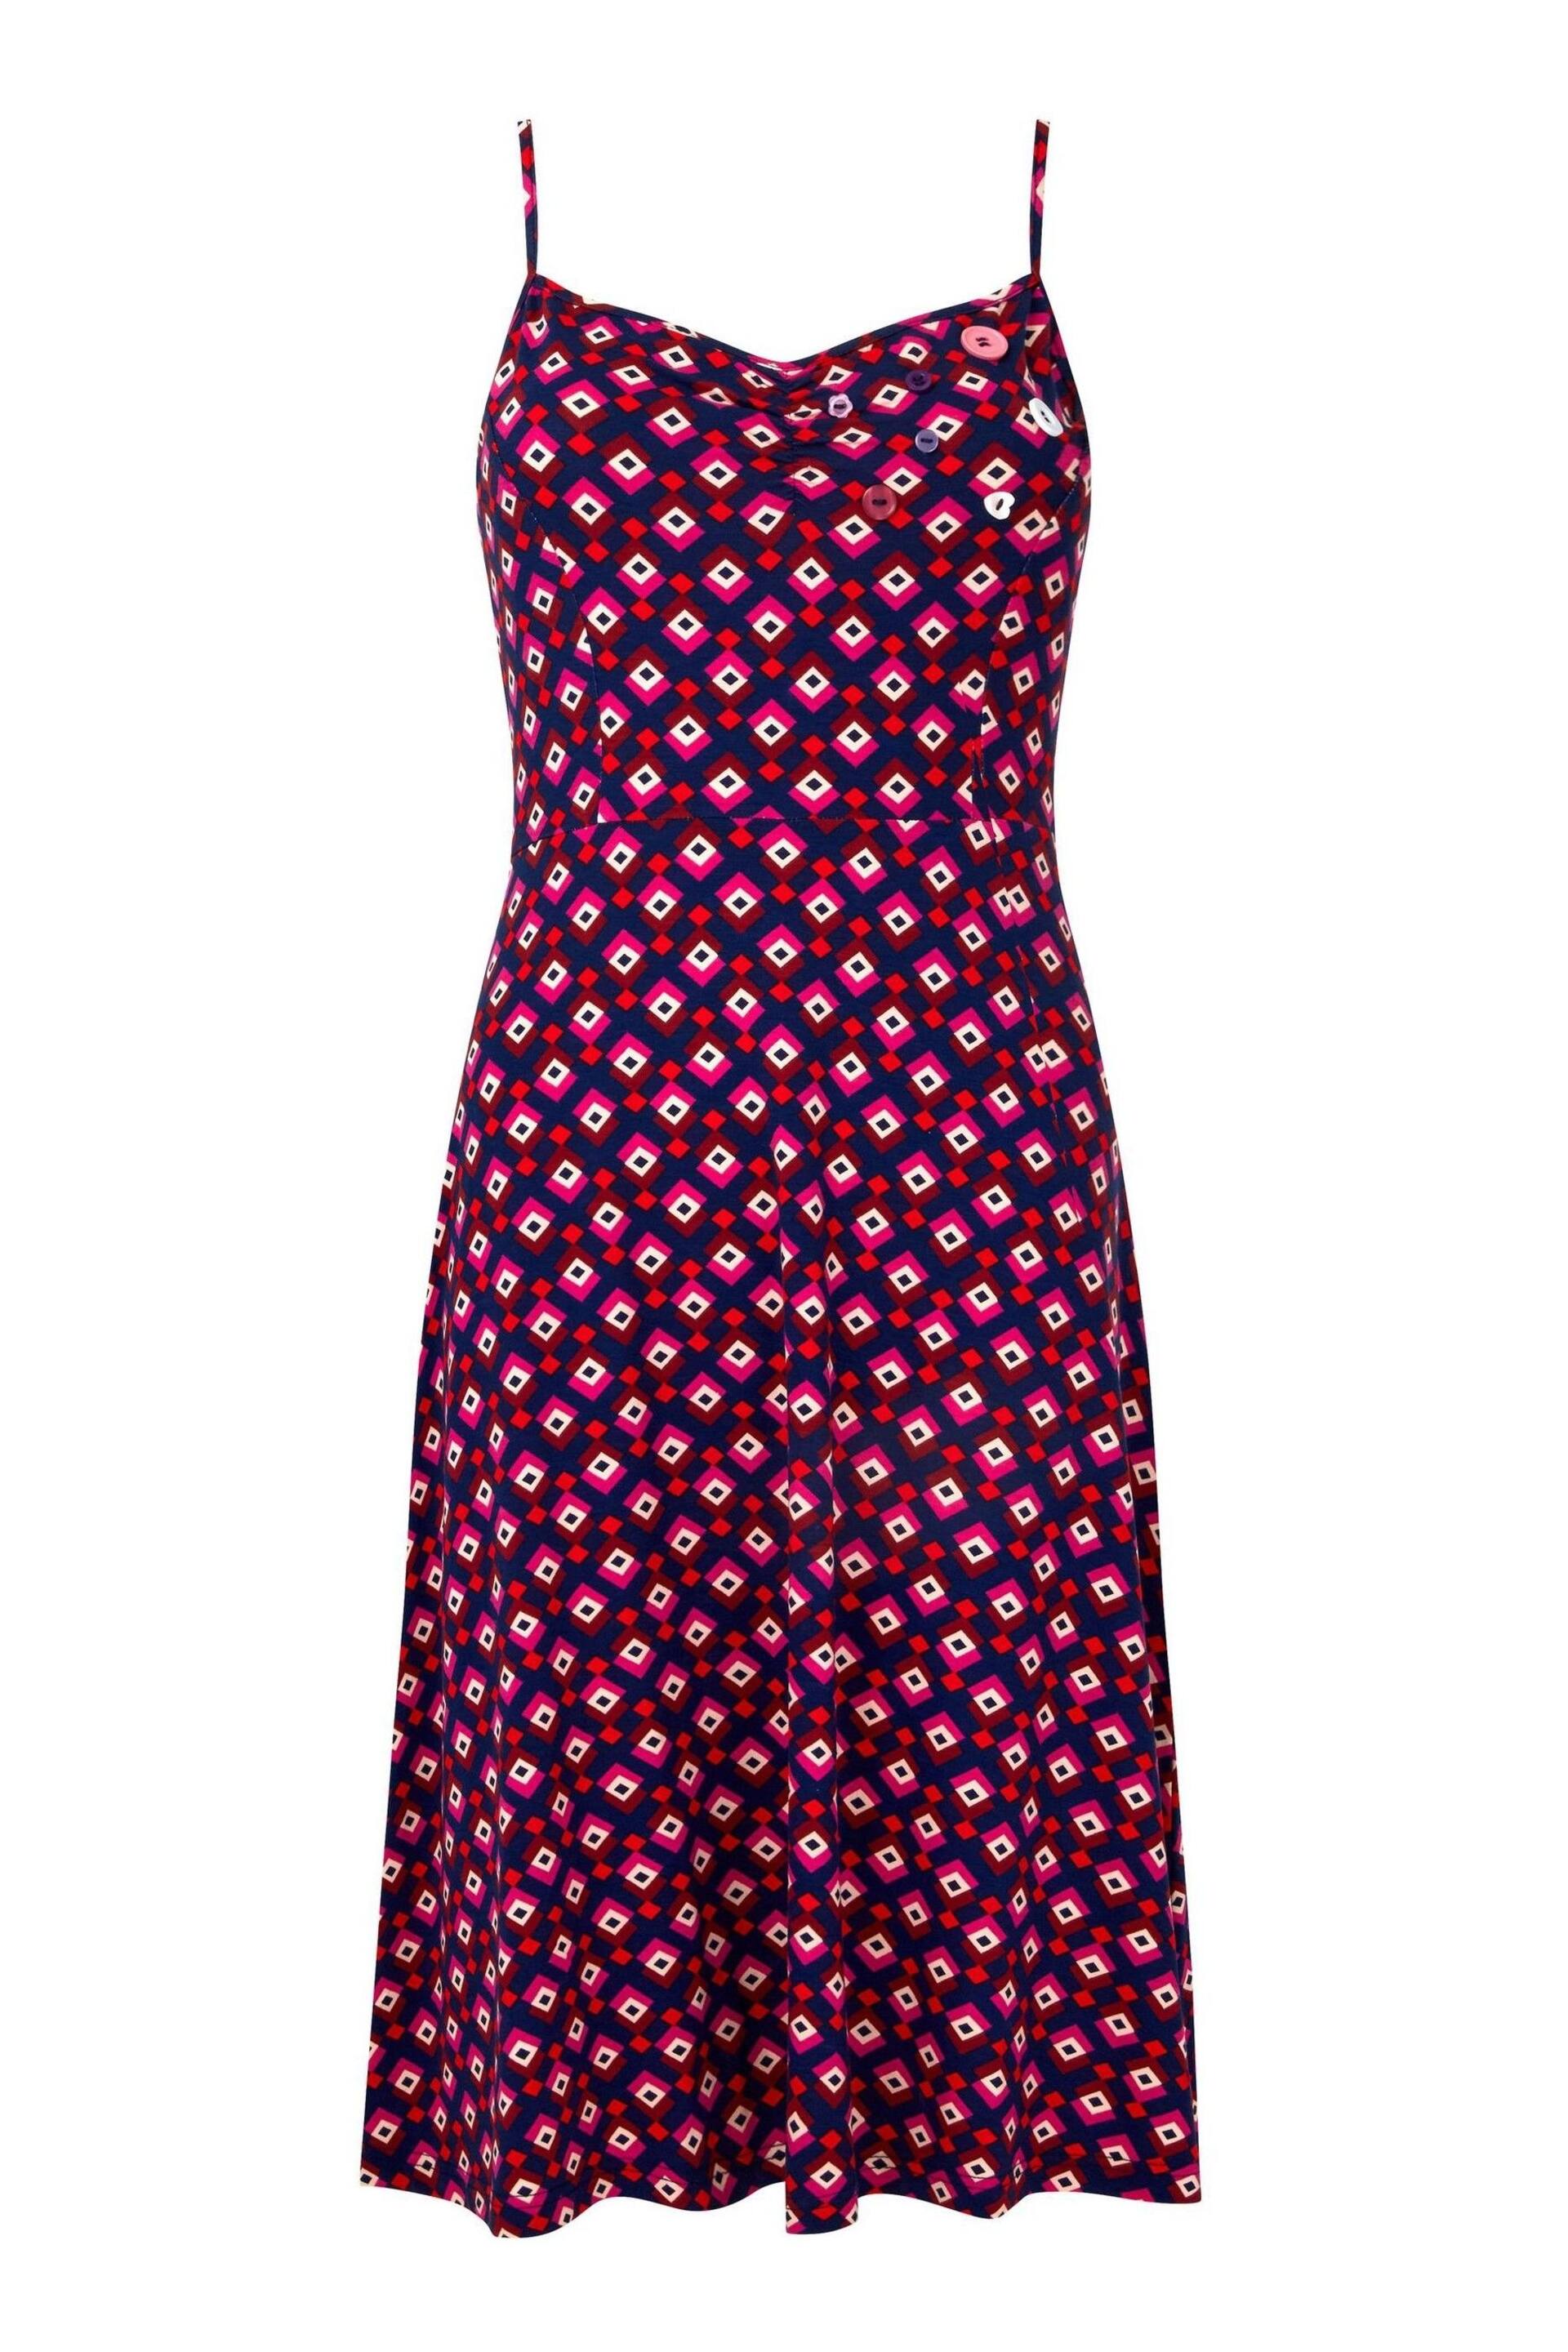 Joe Browns Red Geo Print Strappy Jersey Sun Dress - Image 6 of 6